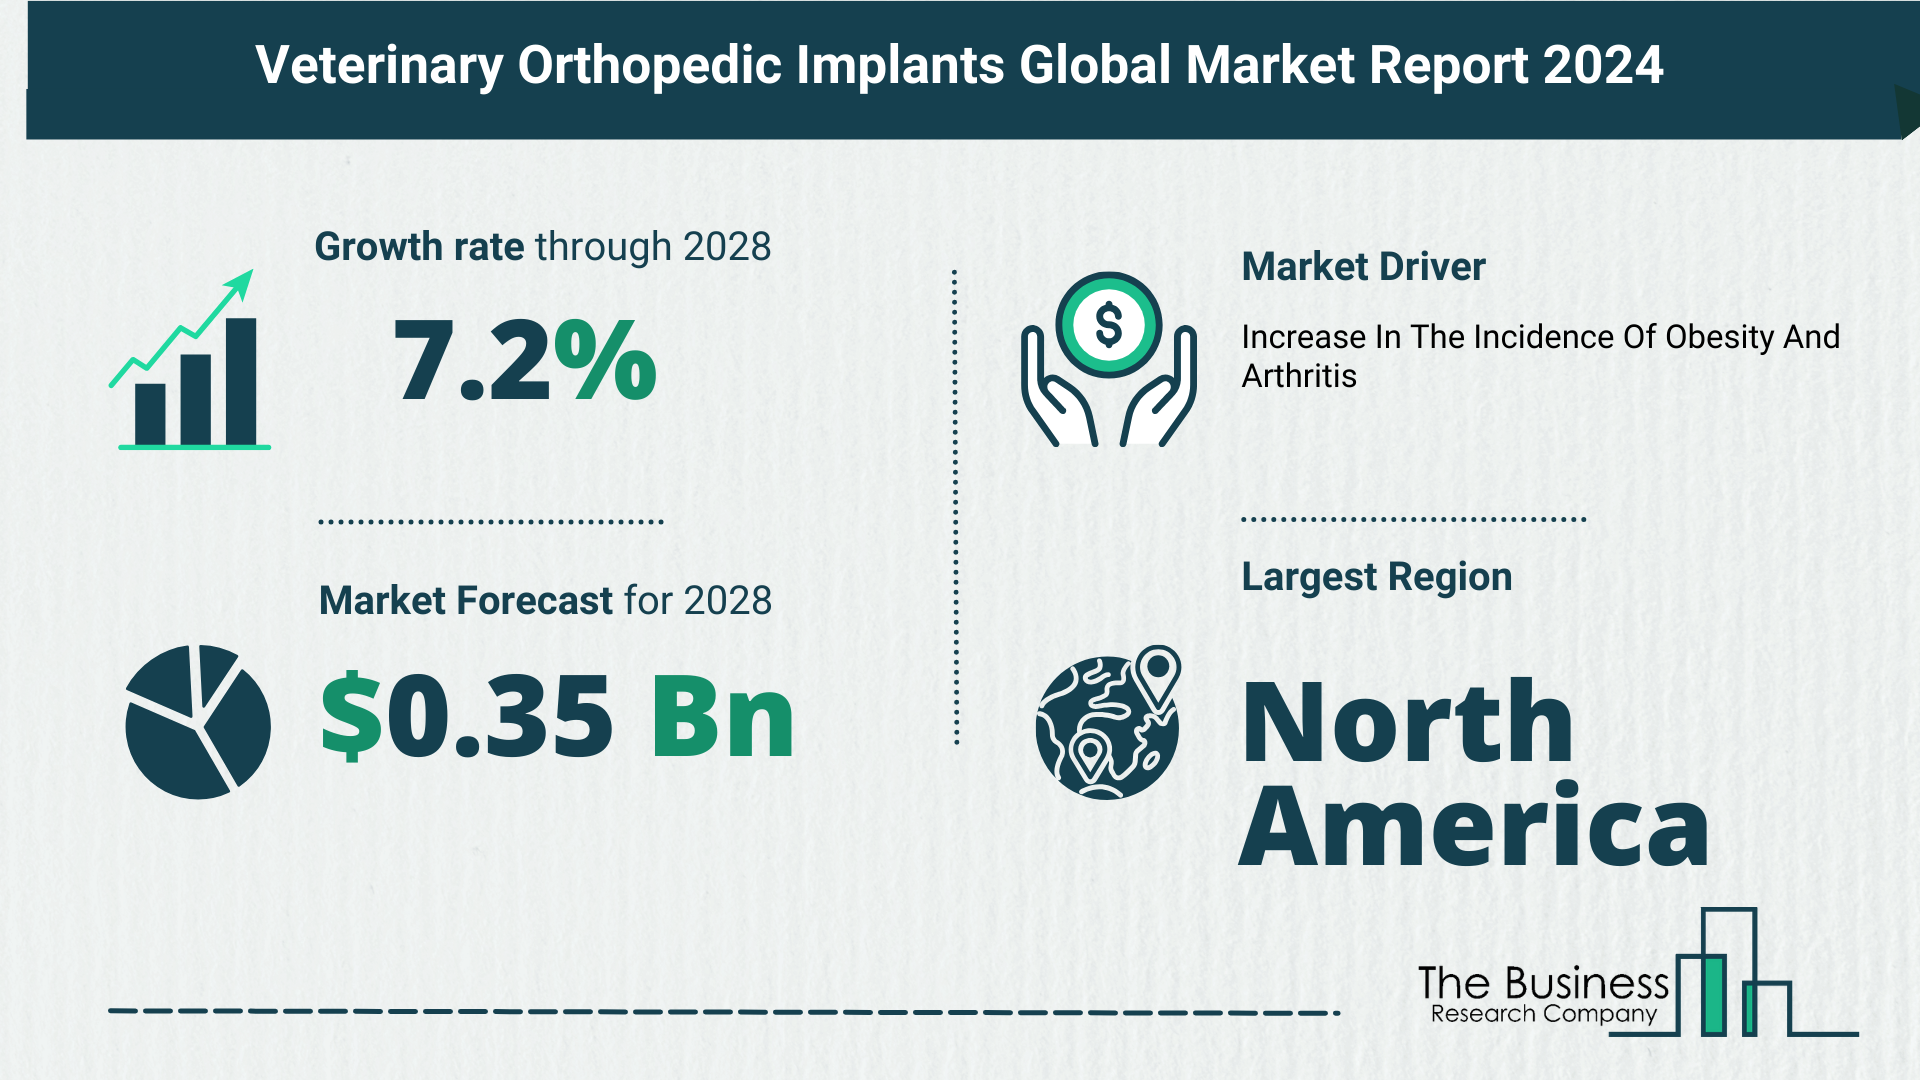 Global Veterinary Orthopedic Implants Market